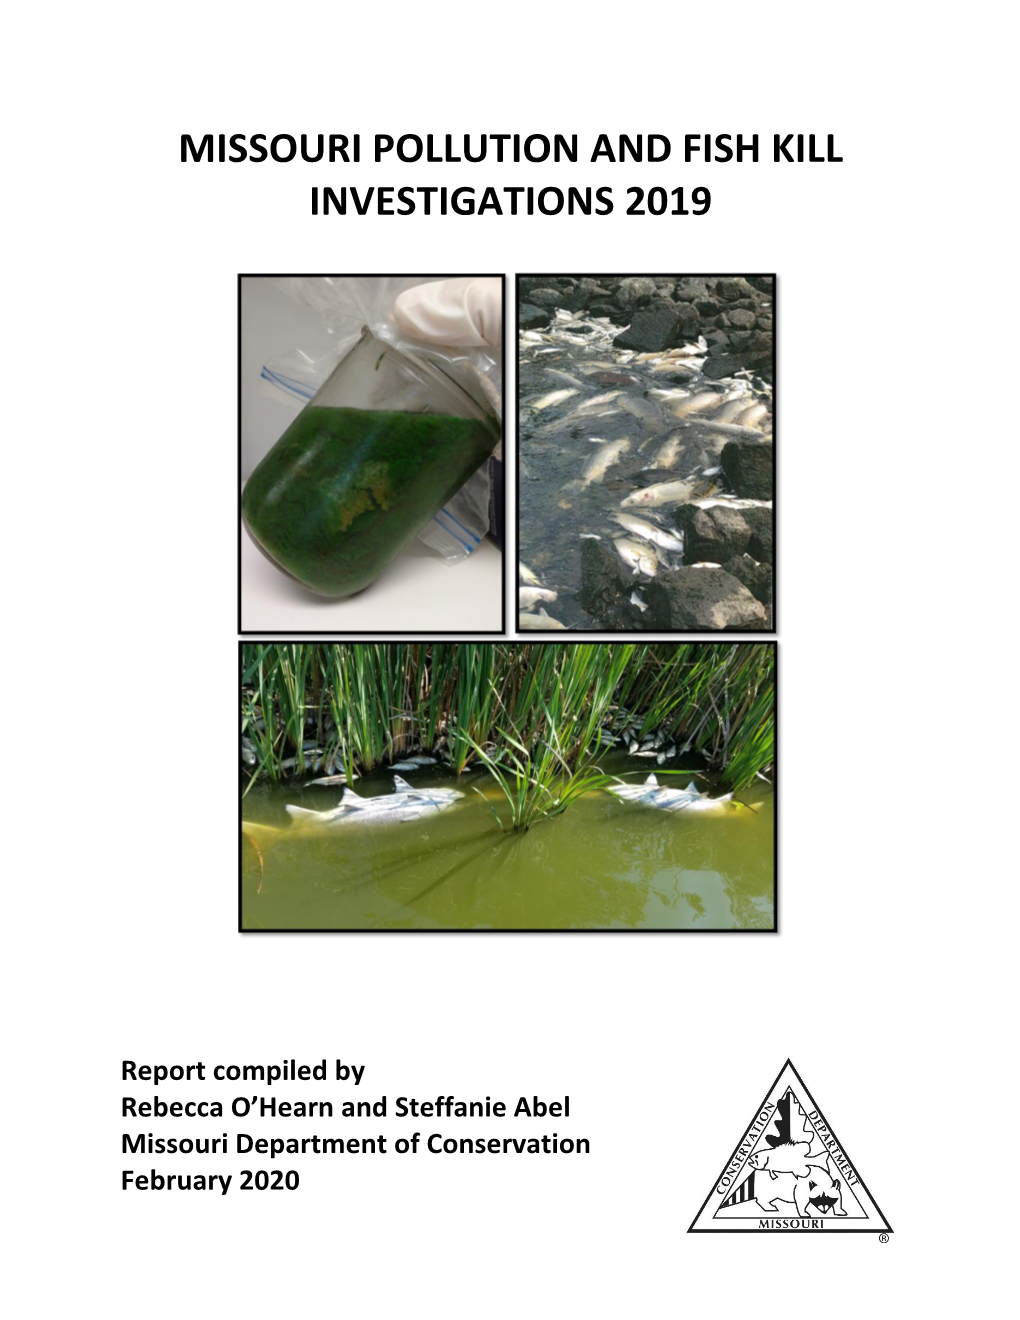 MDC Pollution and Fish Kill Investigations 2019